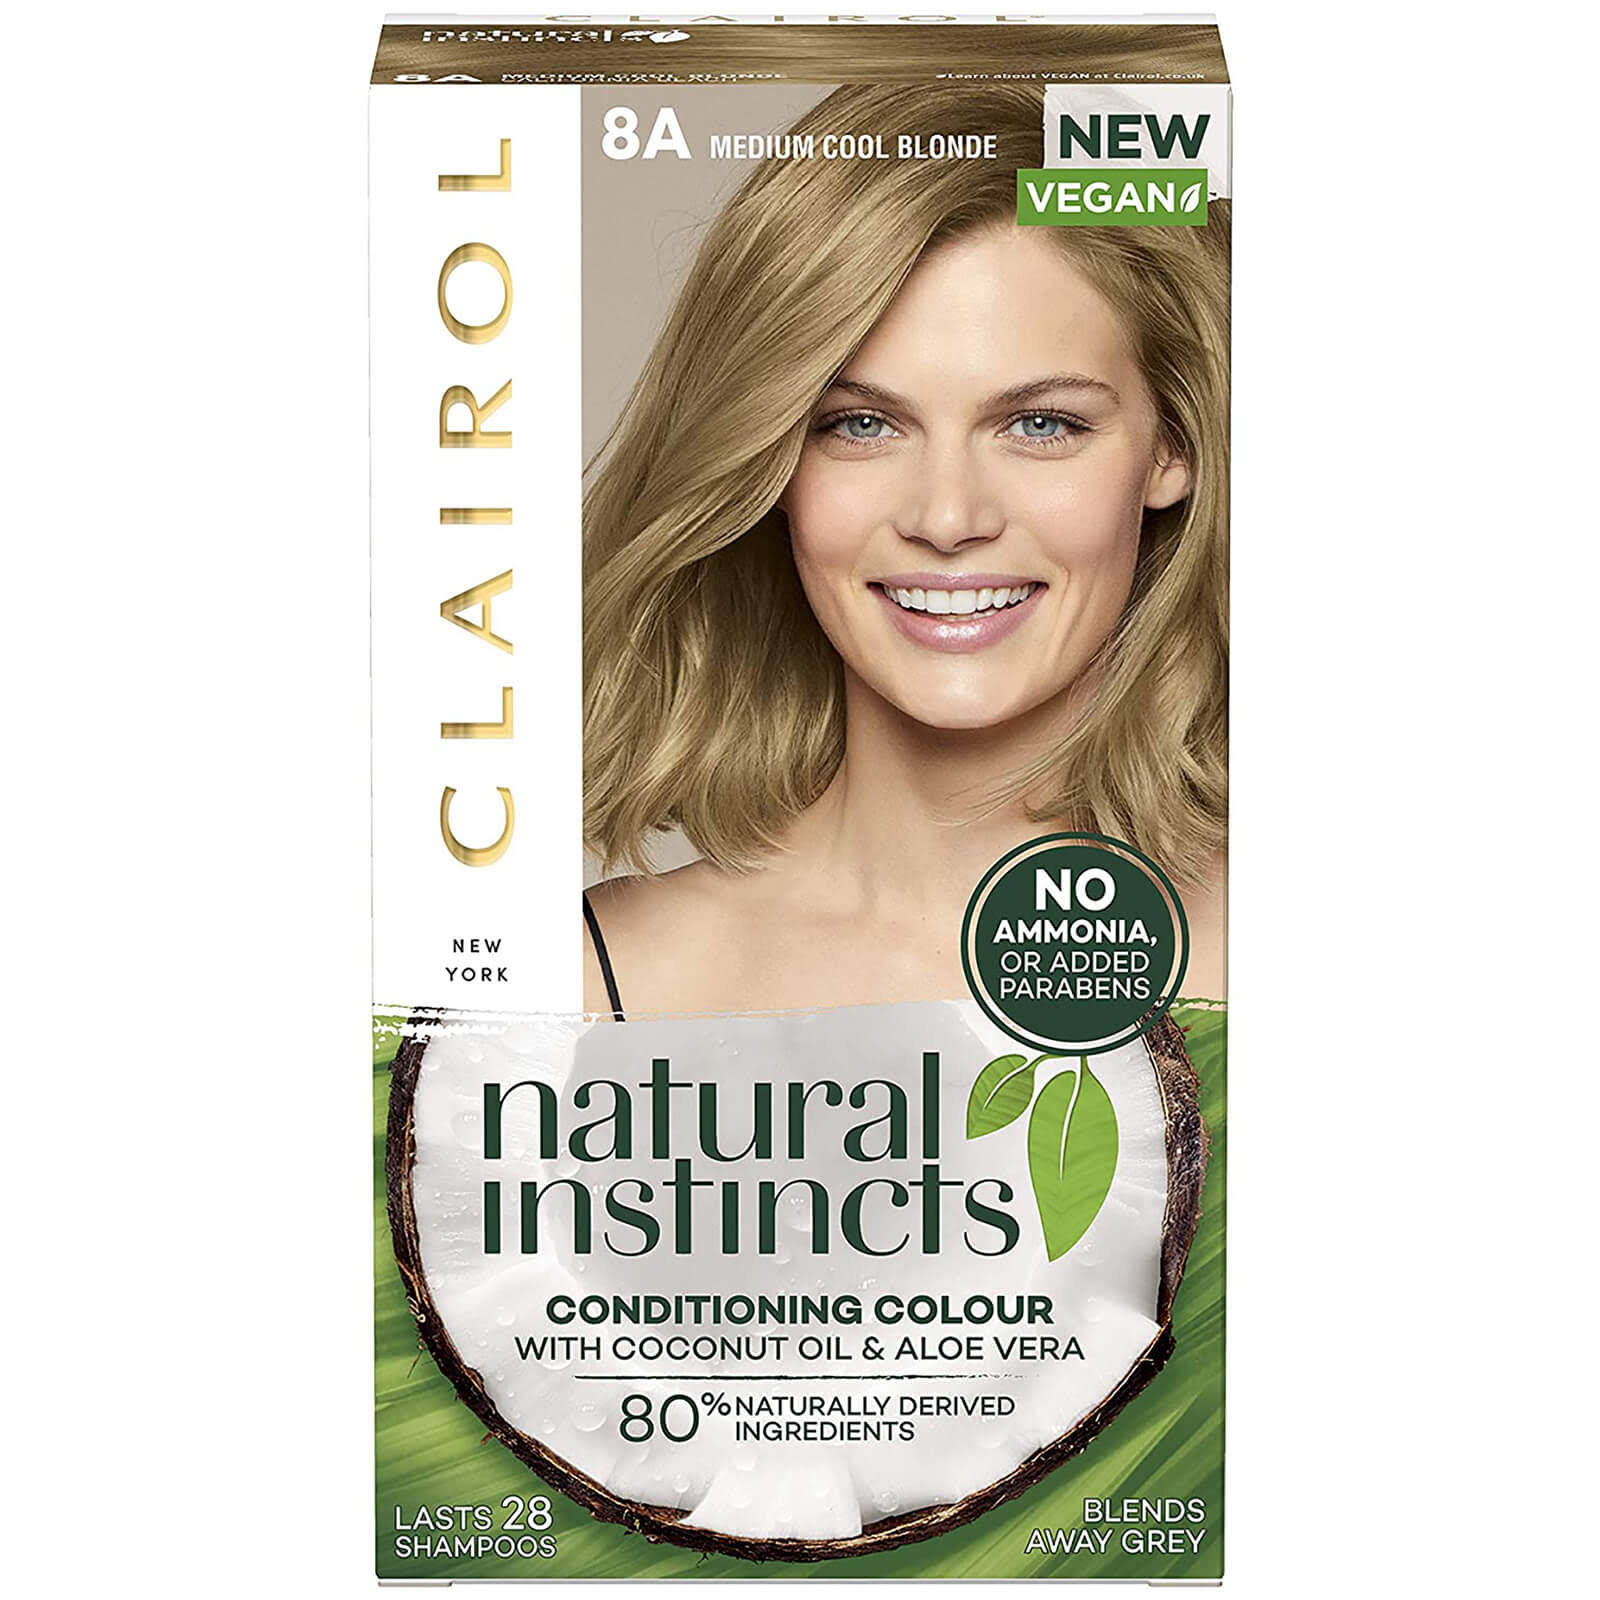 Clairol Natural Instincts Semi-Permanent No Ammonia Vegan Hair Dye 177ml (Various Shades) - 8A Medium Cool Blonde